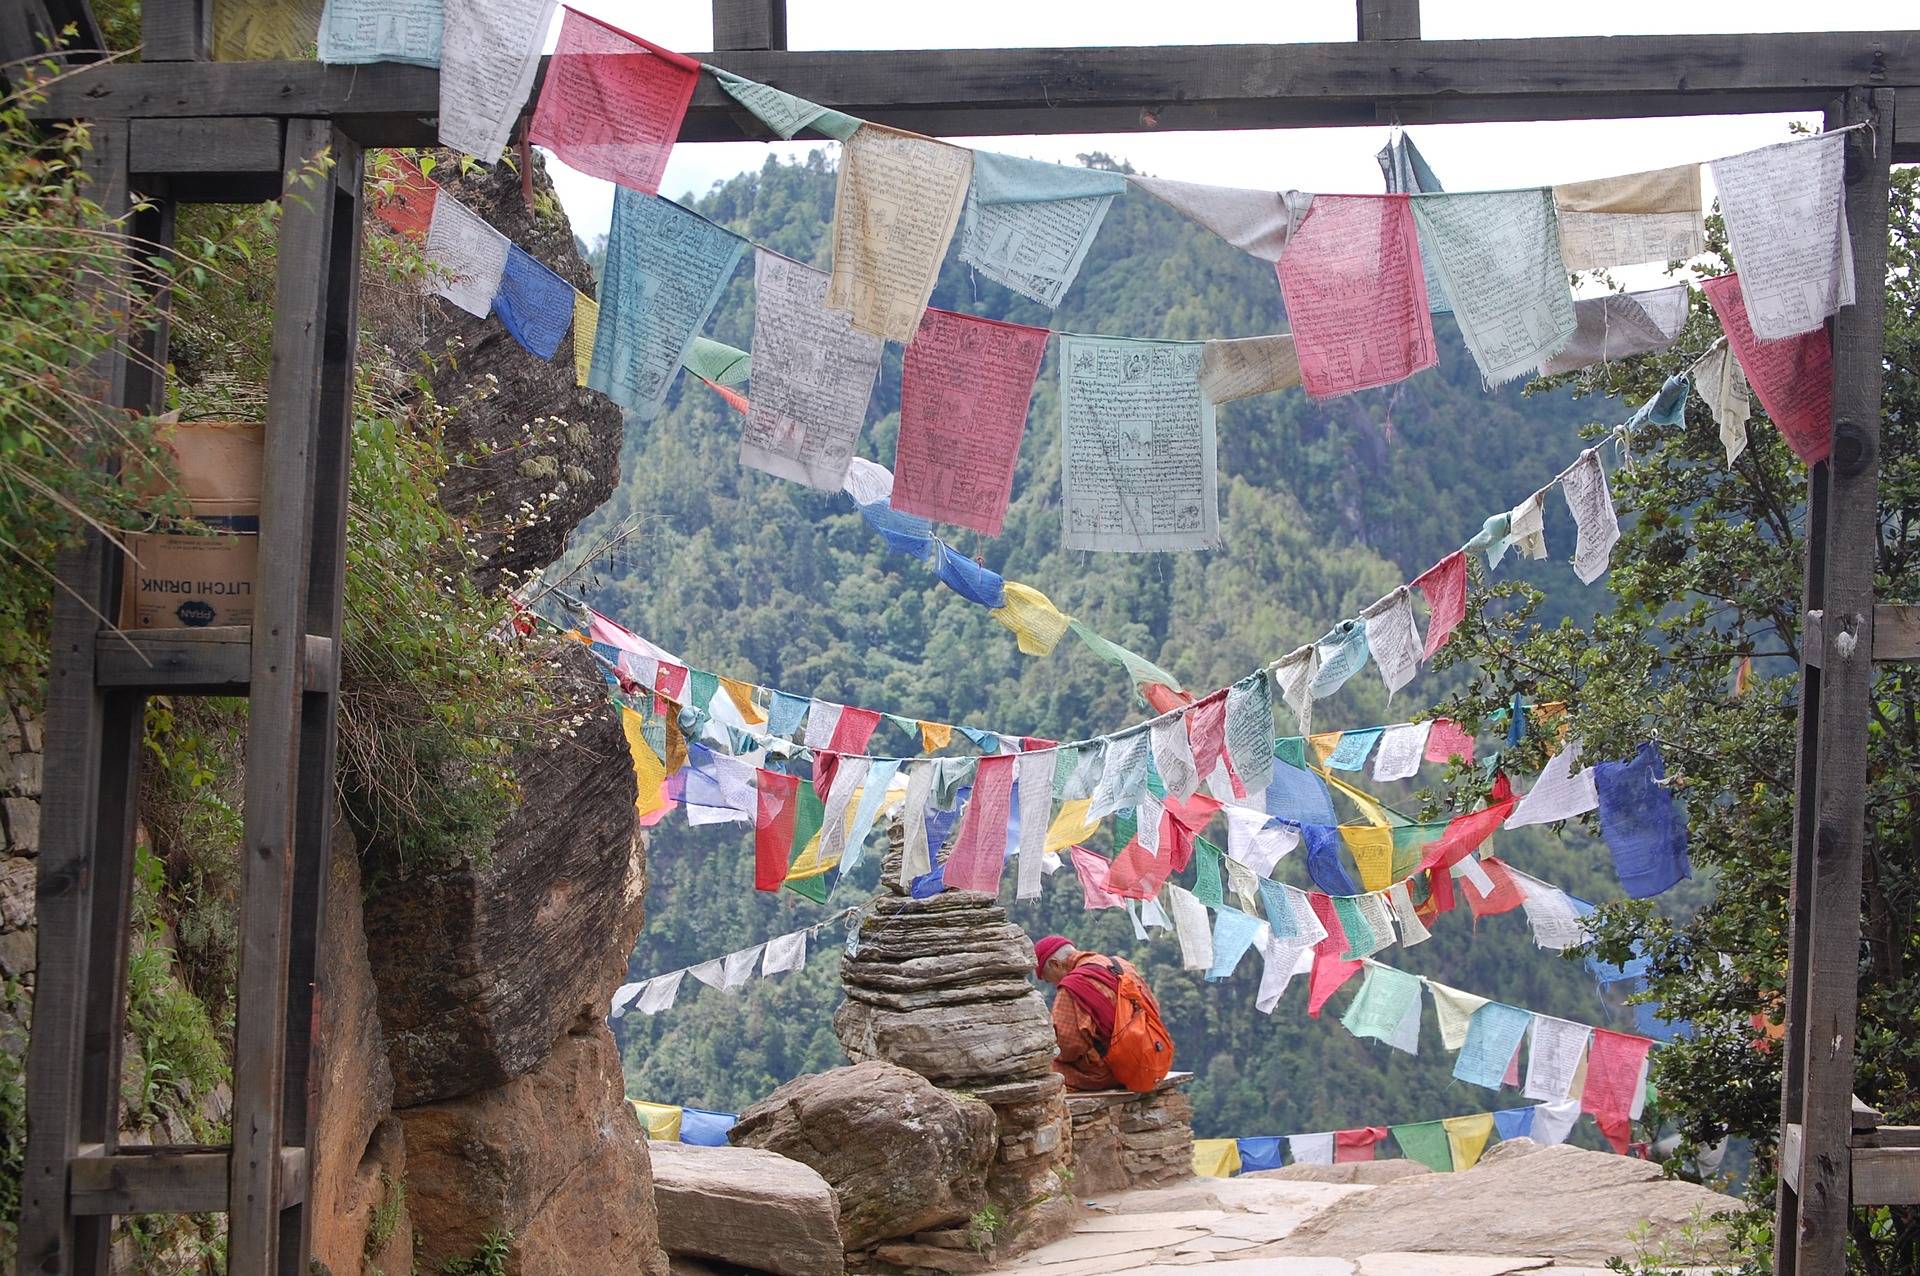 SUSTOUR Bhutan